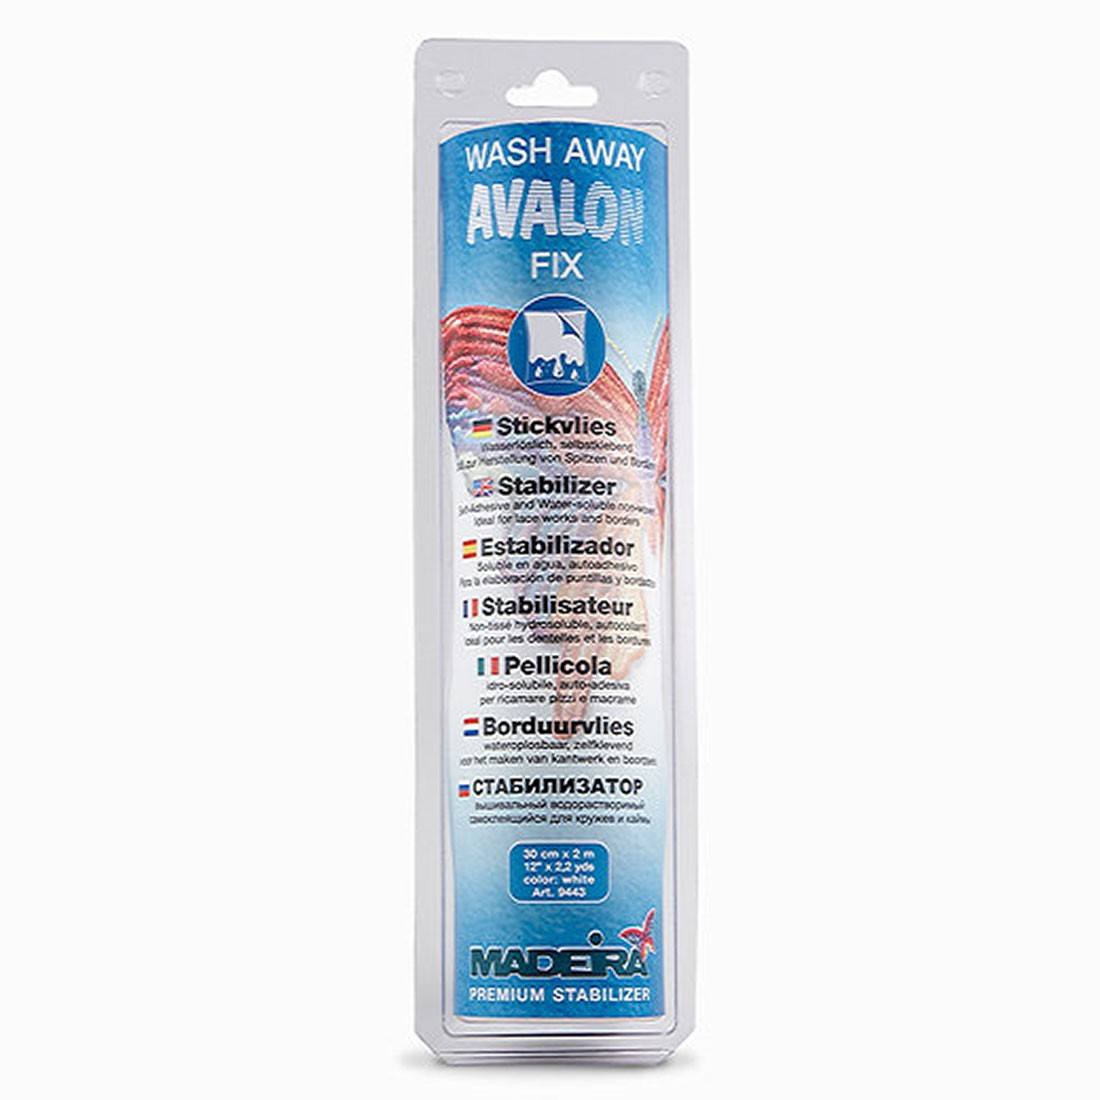 Madeira Avalon Fix Wash Away Stabilizer - 9.5" x 1.1yds image # 32386